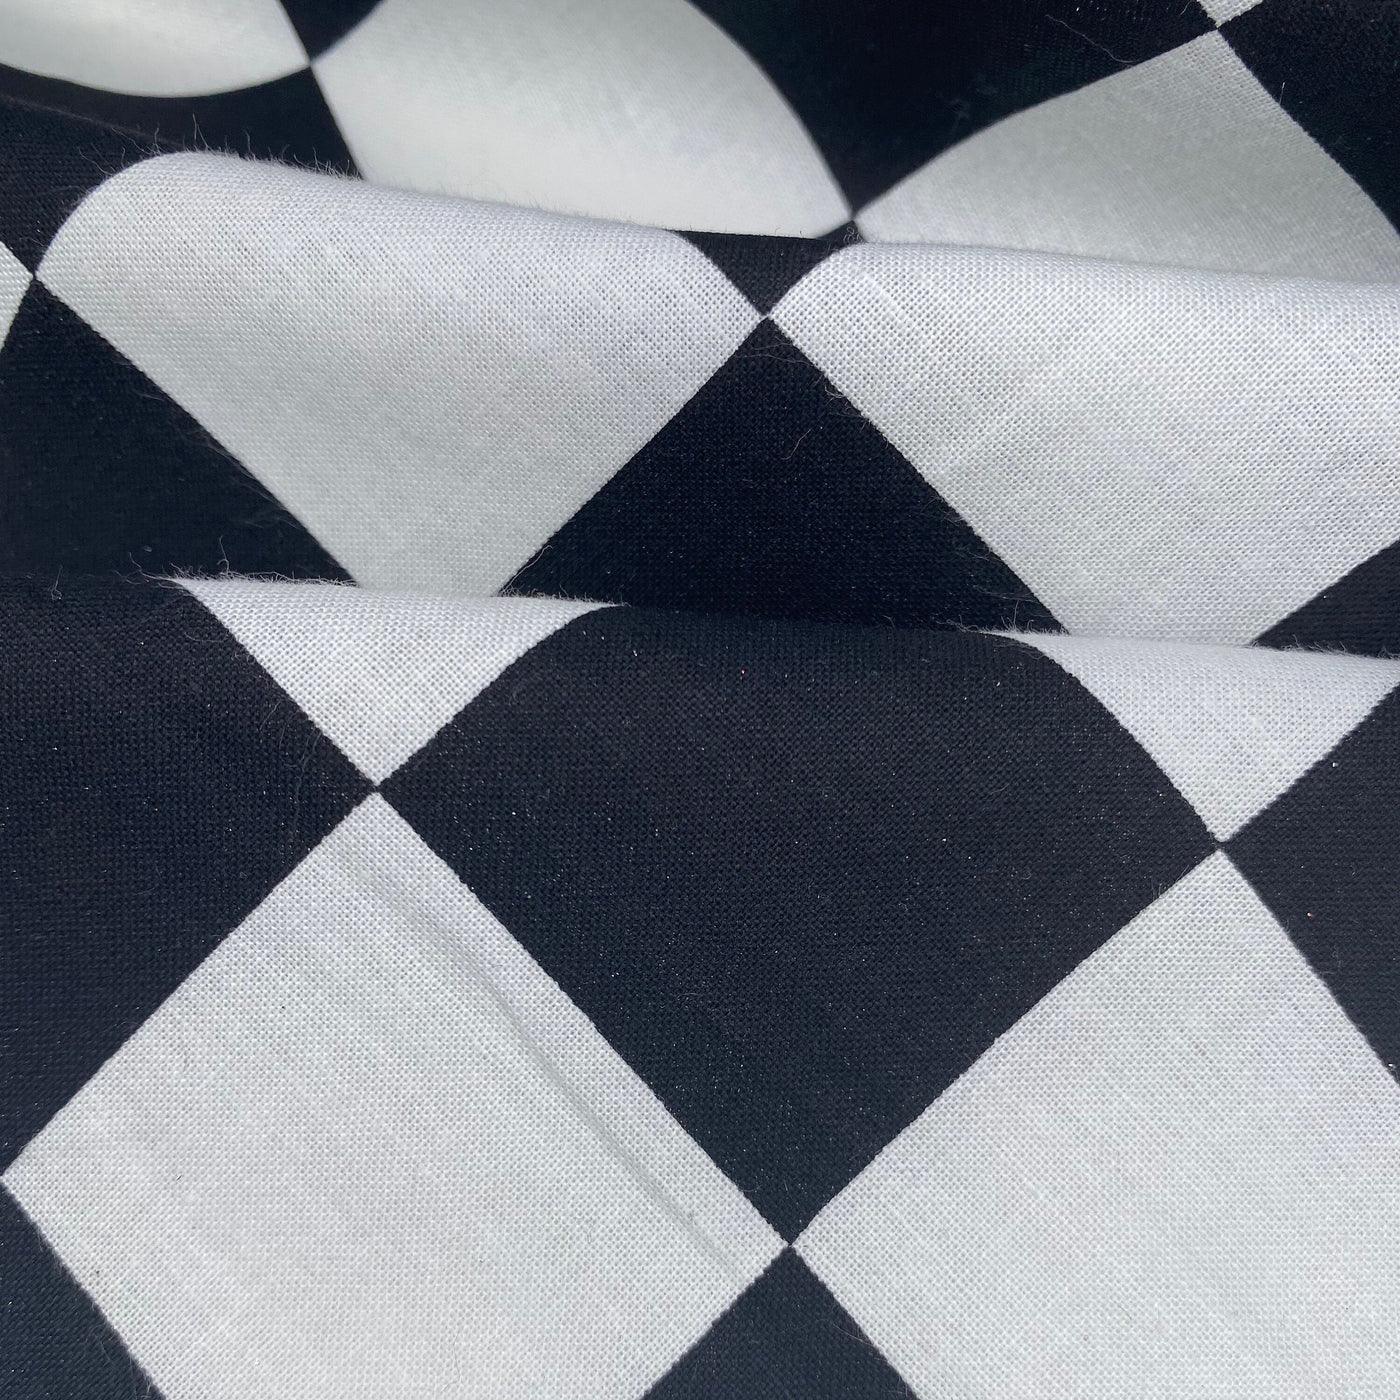 Quilting Cotton - Checkered - Black/White